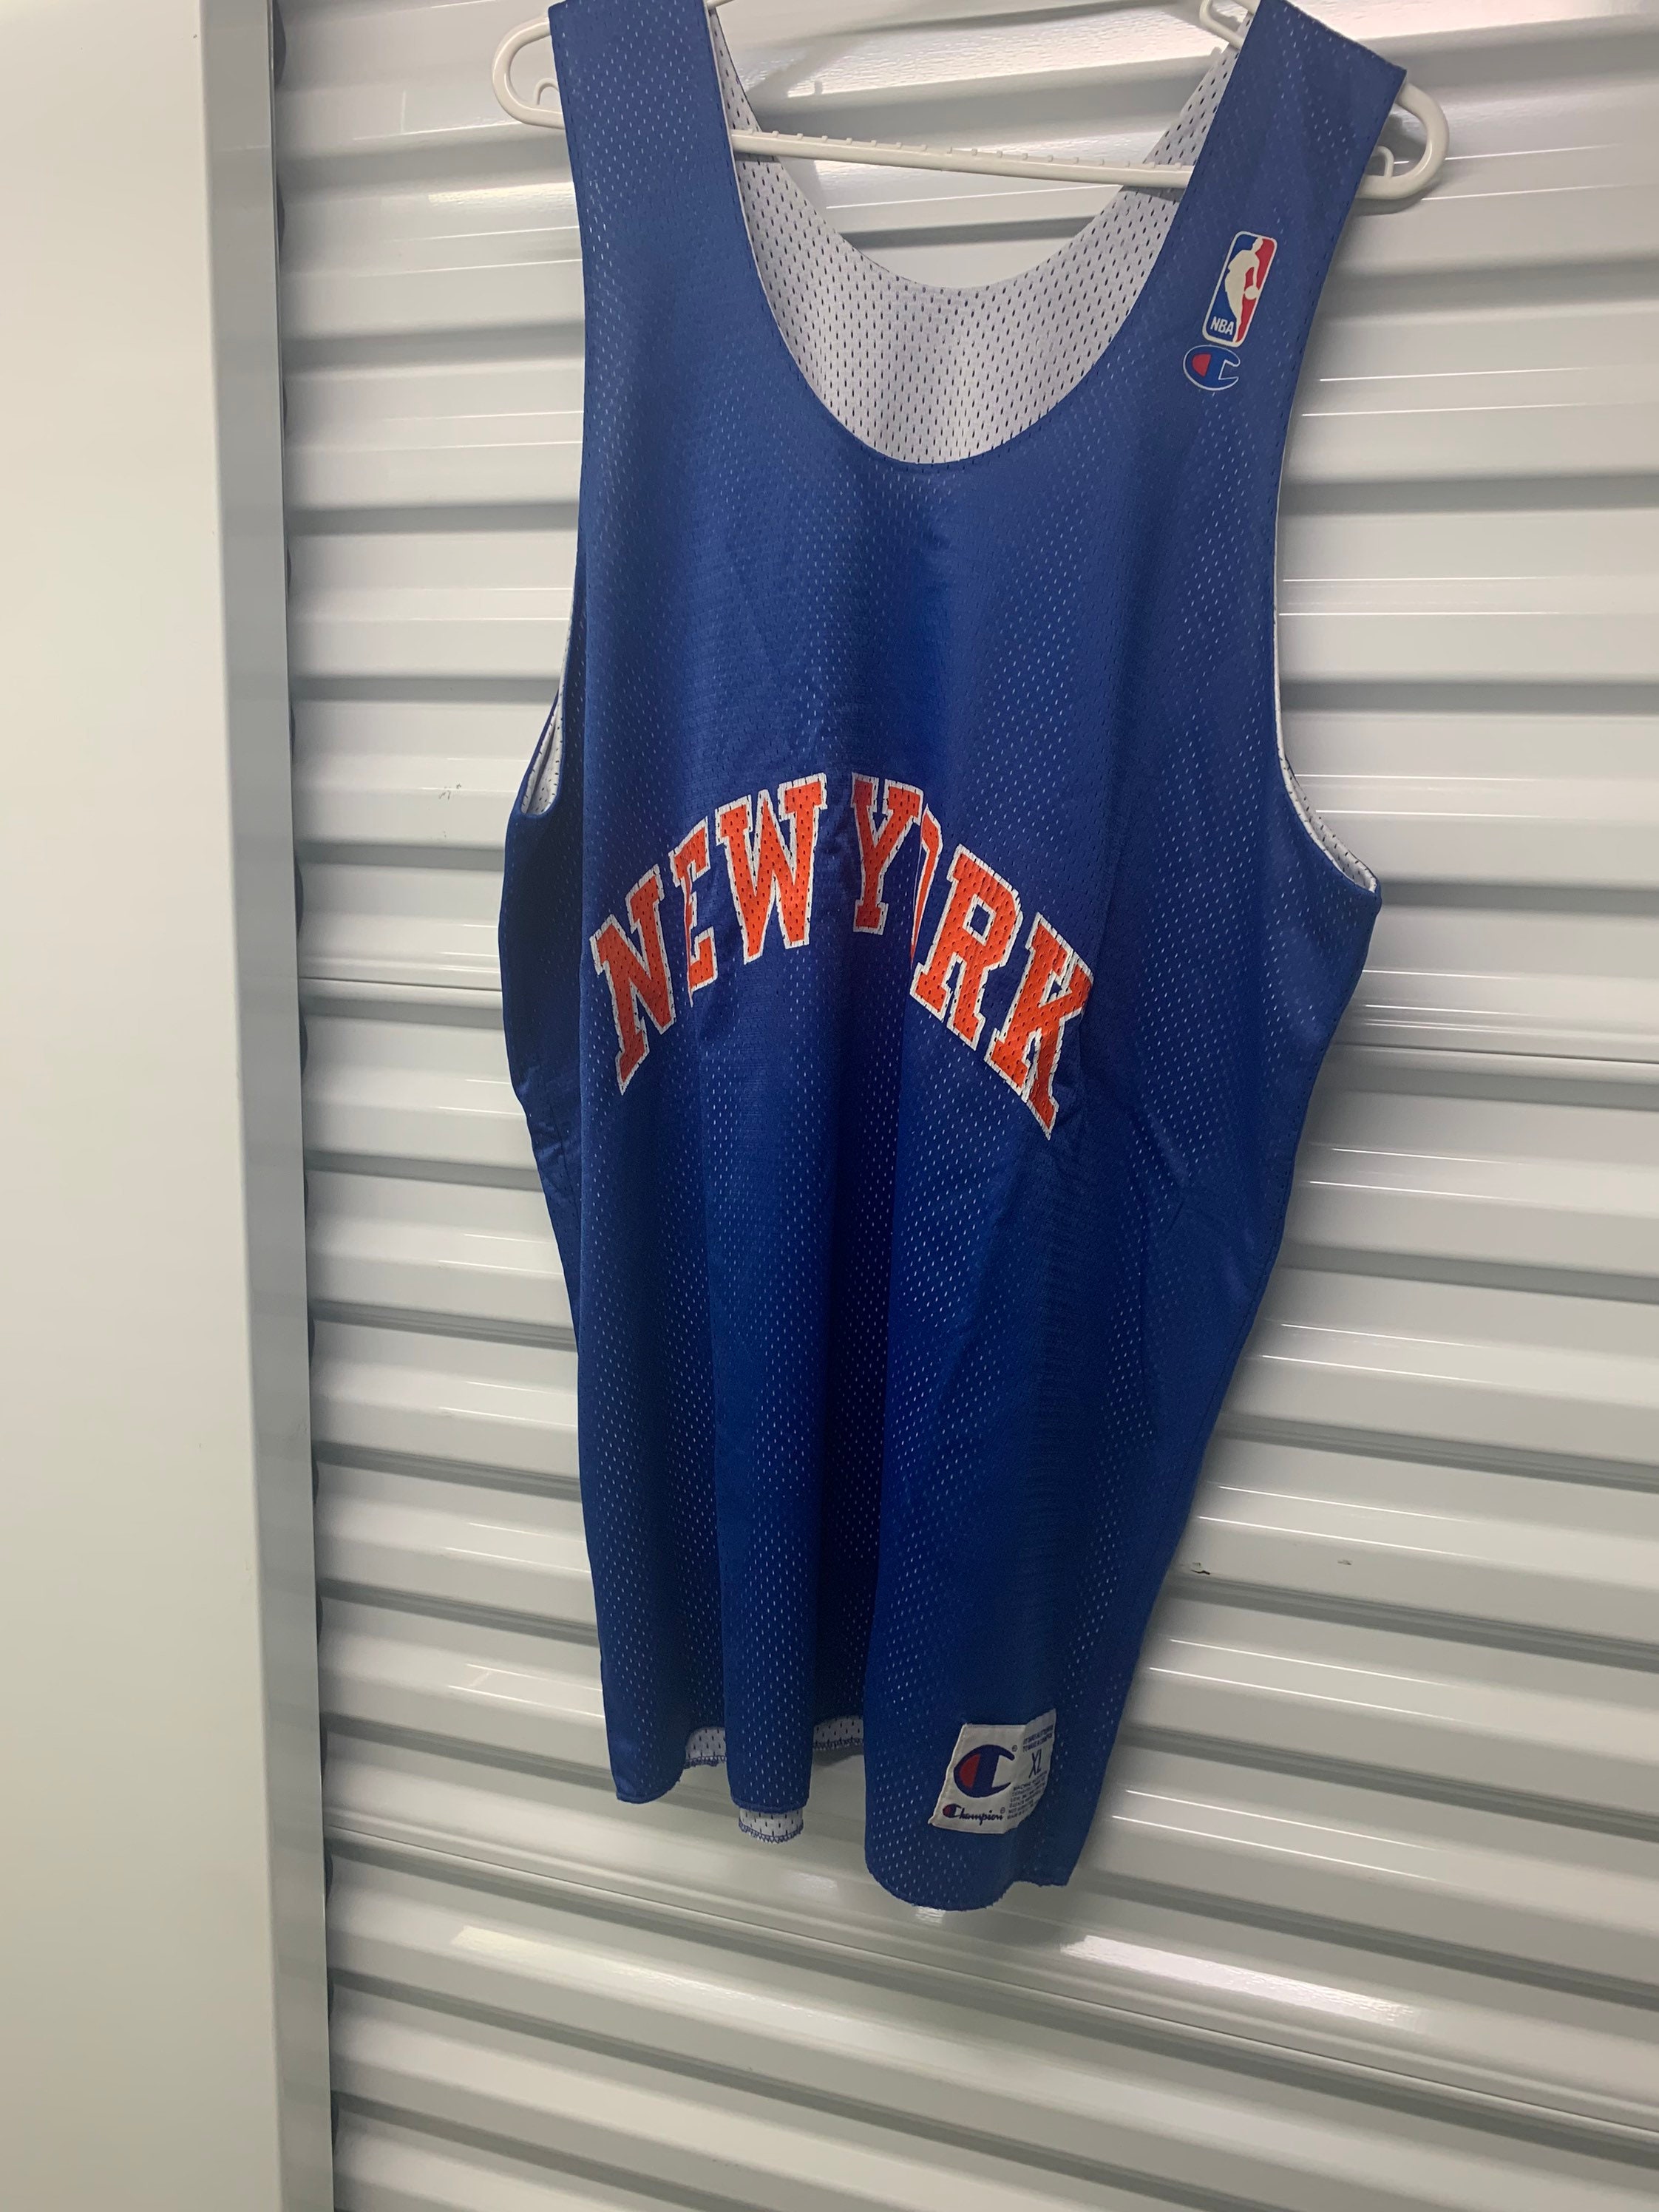 1996-97 Larry Johnson Game Worn New York Knicks Throwback Jersey